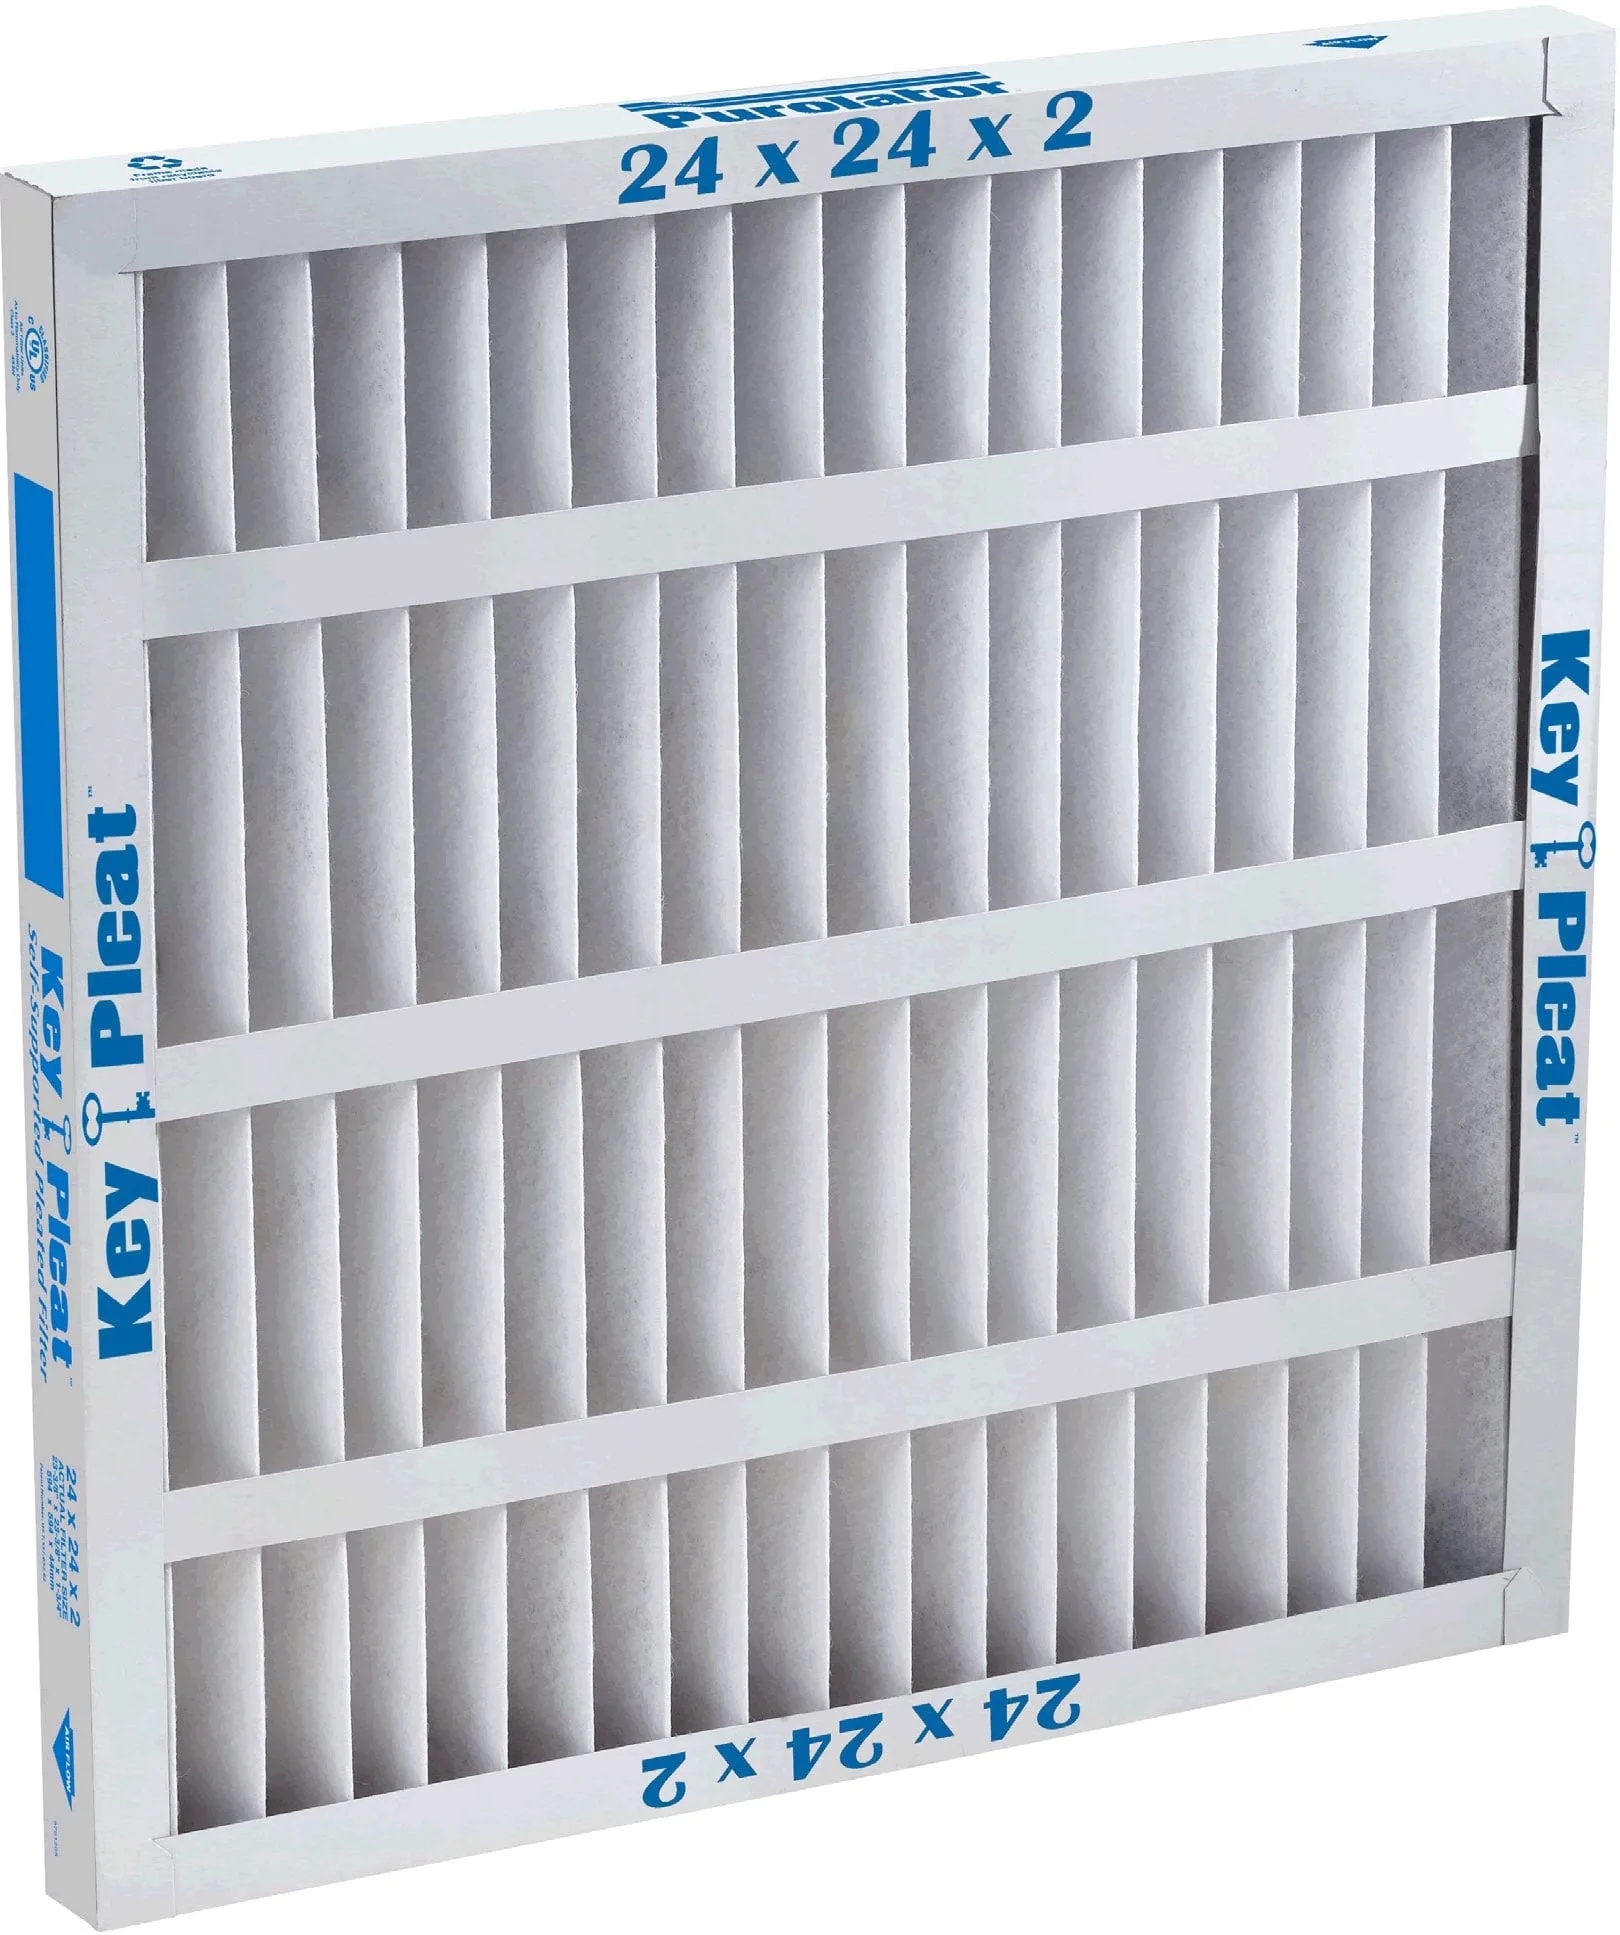 Purolator air filters